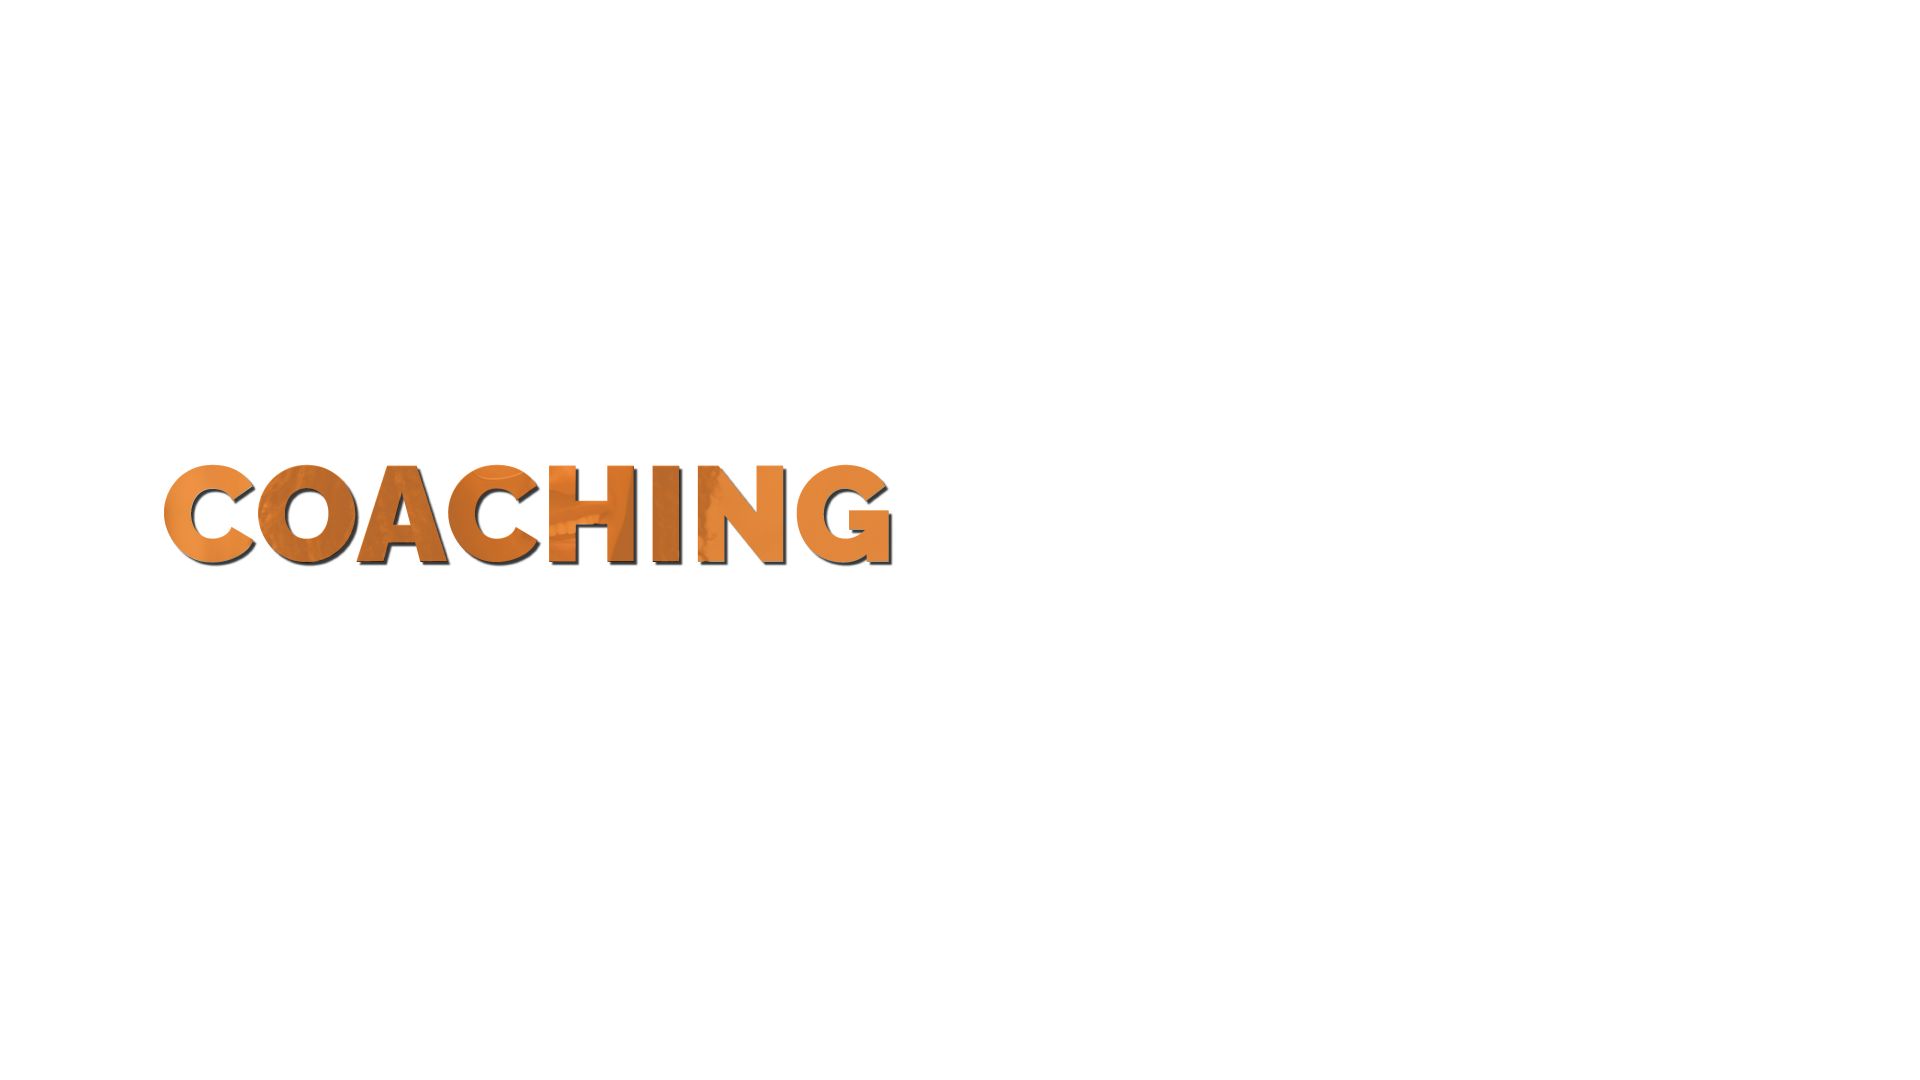 Coaching written in orange text